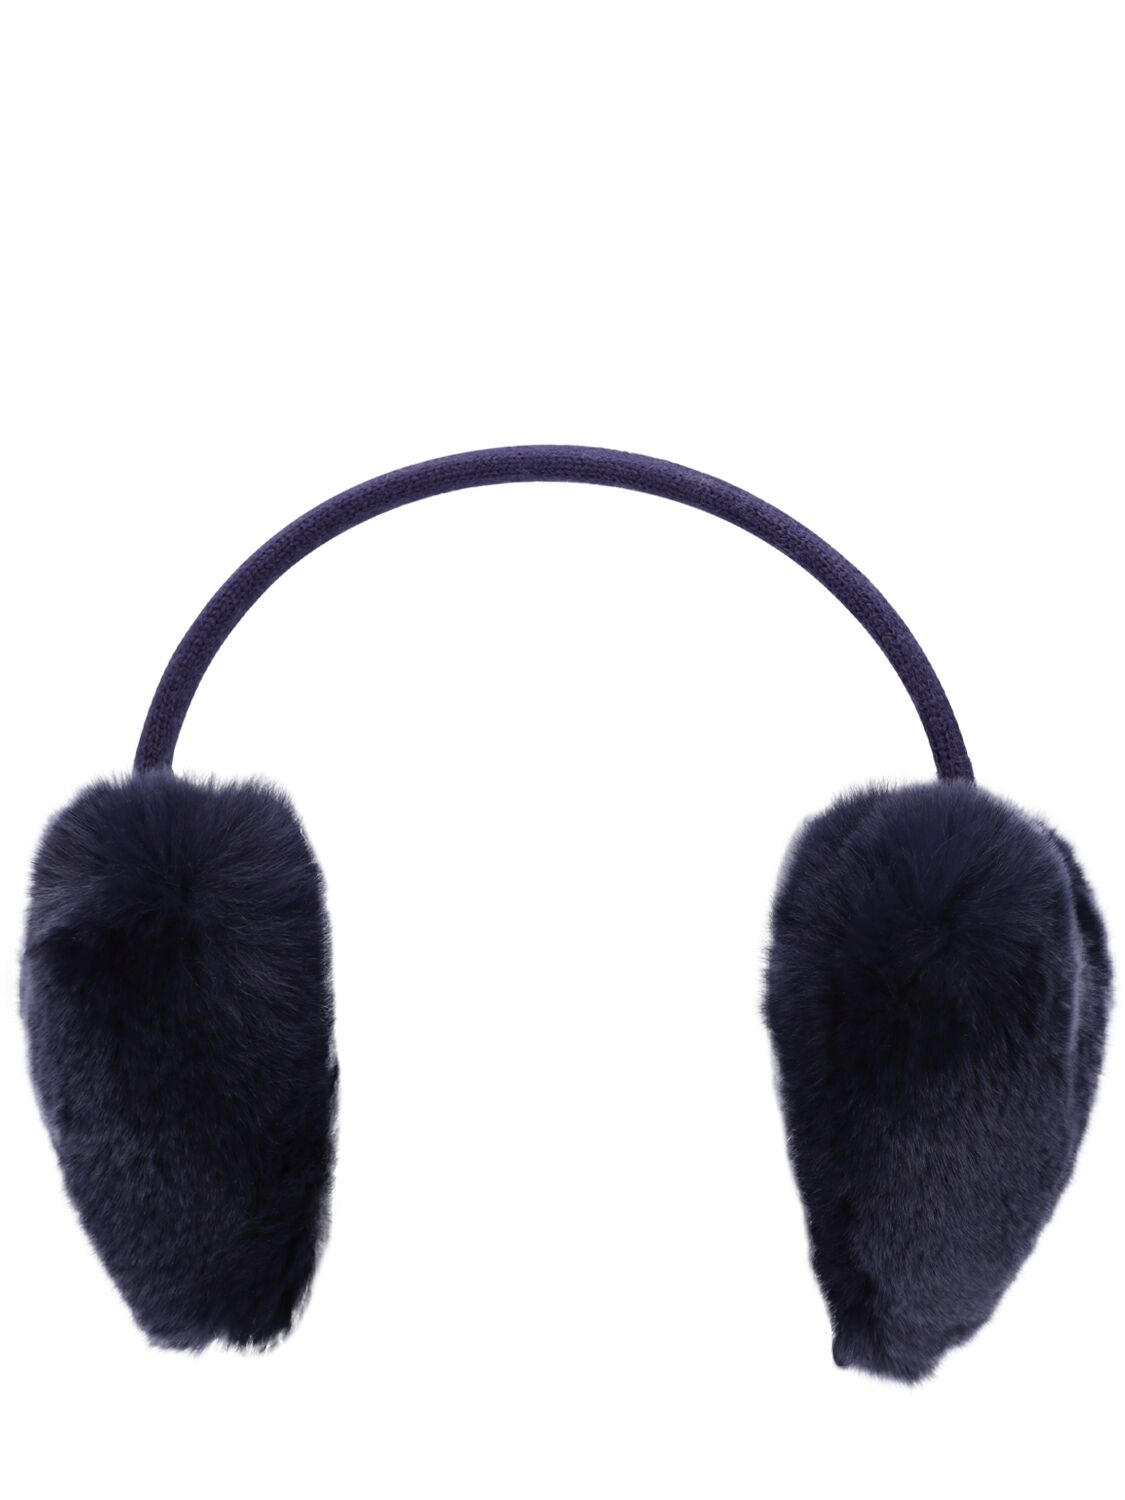 Image of Wool & Cashmere Earmuffs W/ Fur